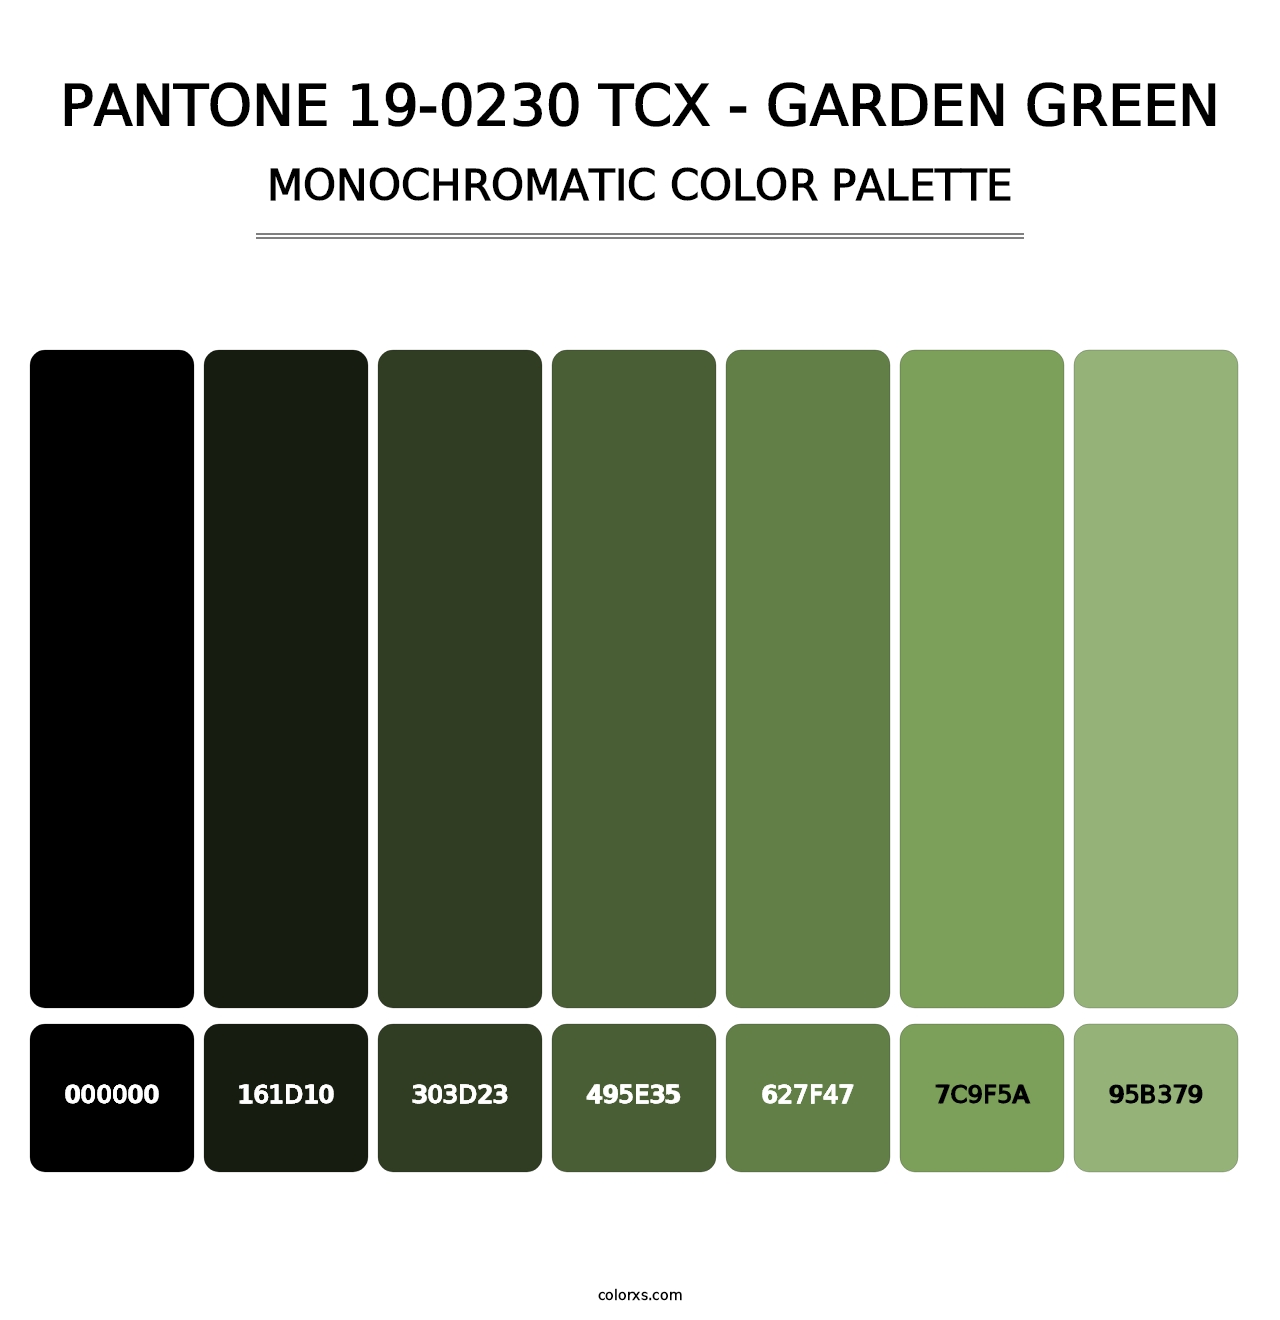 PANTONE 19-0230 TCX - Garden Green - Monochromatic Color Palette